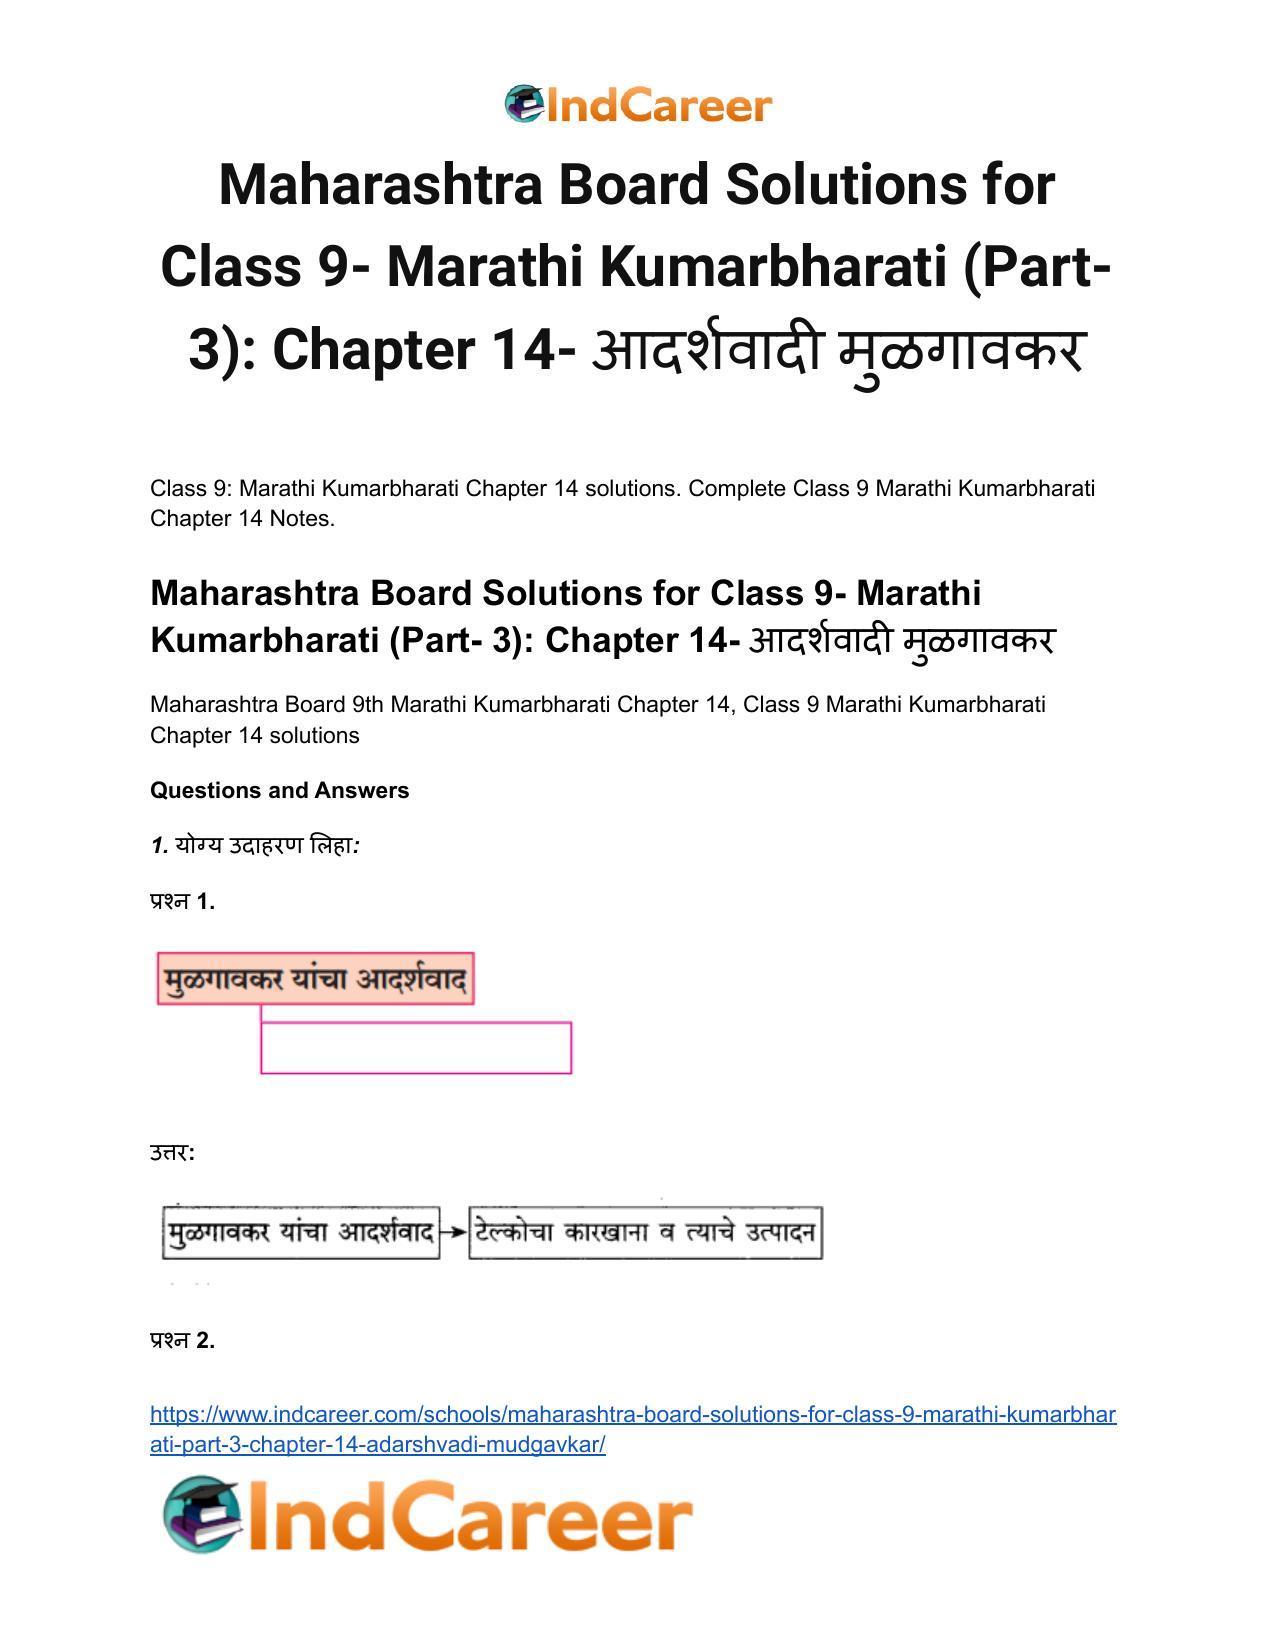 Maharashtra Board Solutions for Class 9- Marathi Kumarbharati (Part- 3): Chapter 14- आदर्शवादी मुळगावकर - Page 2